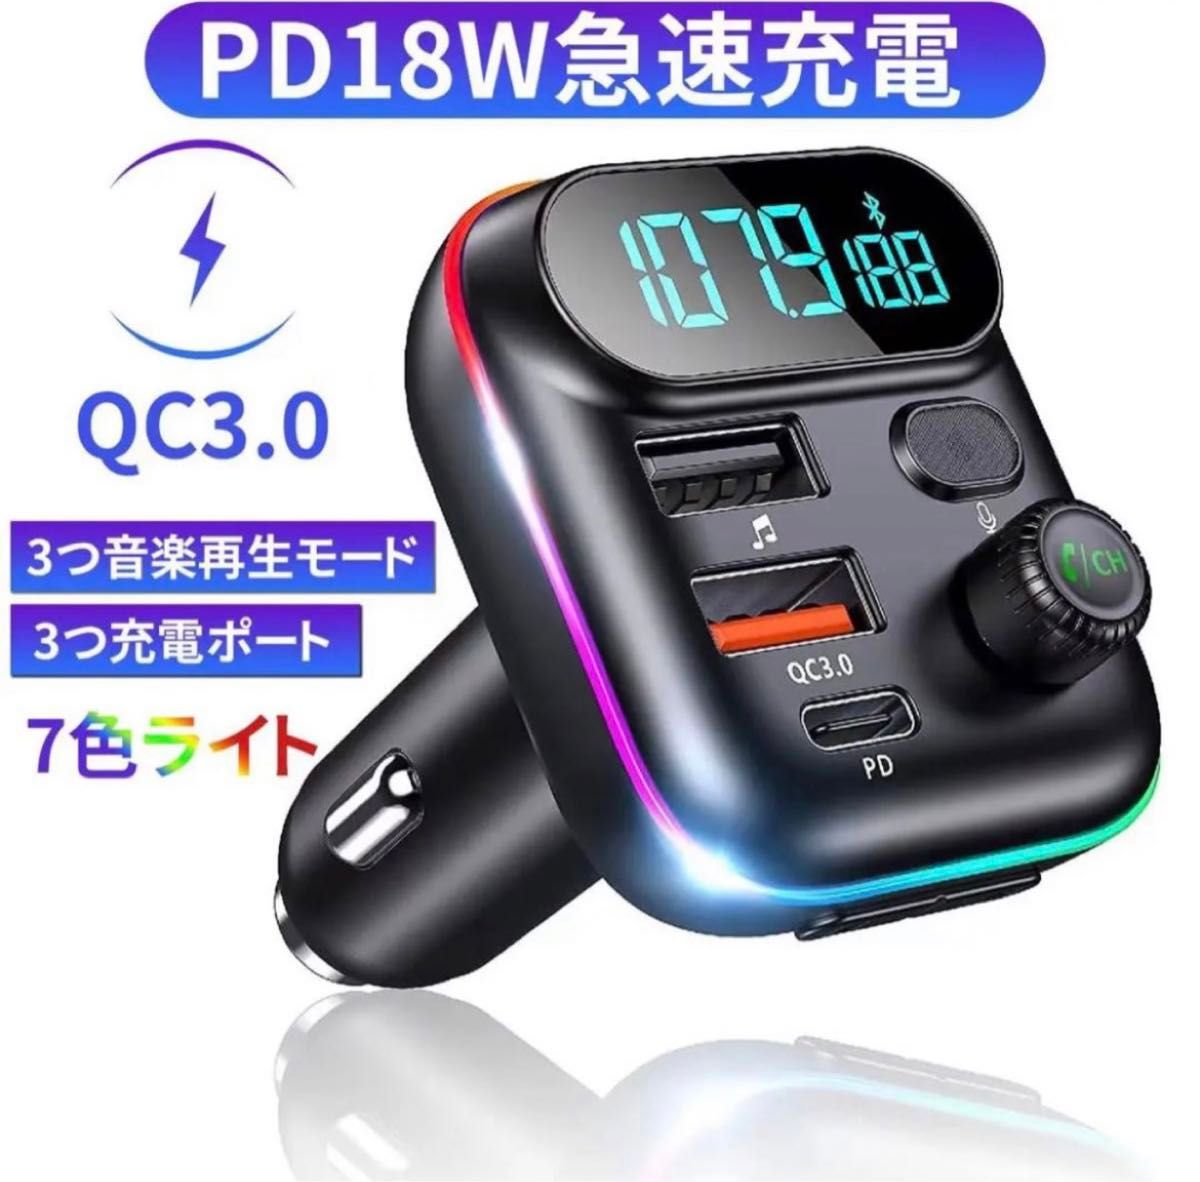 PD18W急速充電 FMトランスミッター 電圧計 高音質 急速充電 車載充電